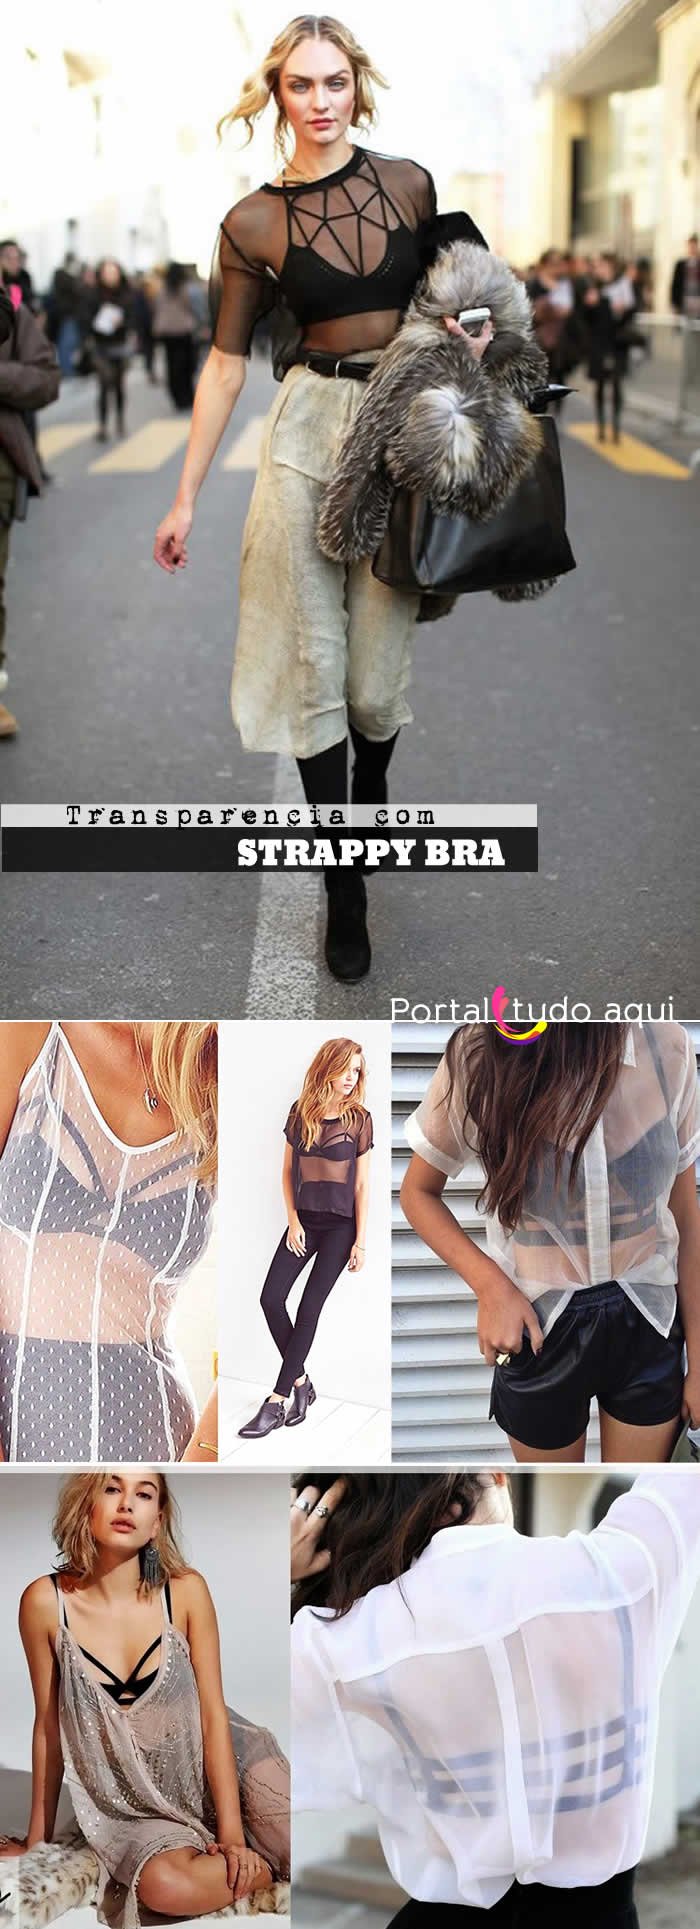 strappy-bra-tendencia-de-moda-com-trasparencia